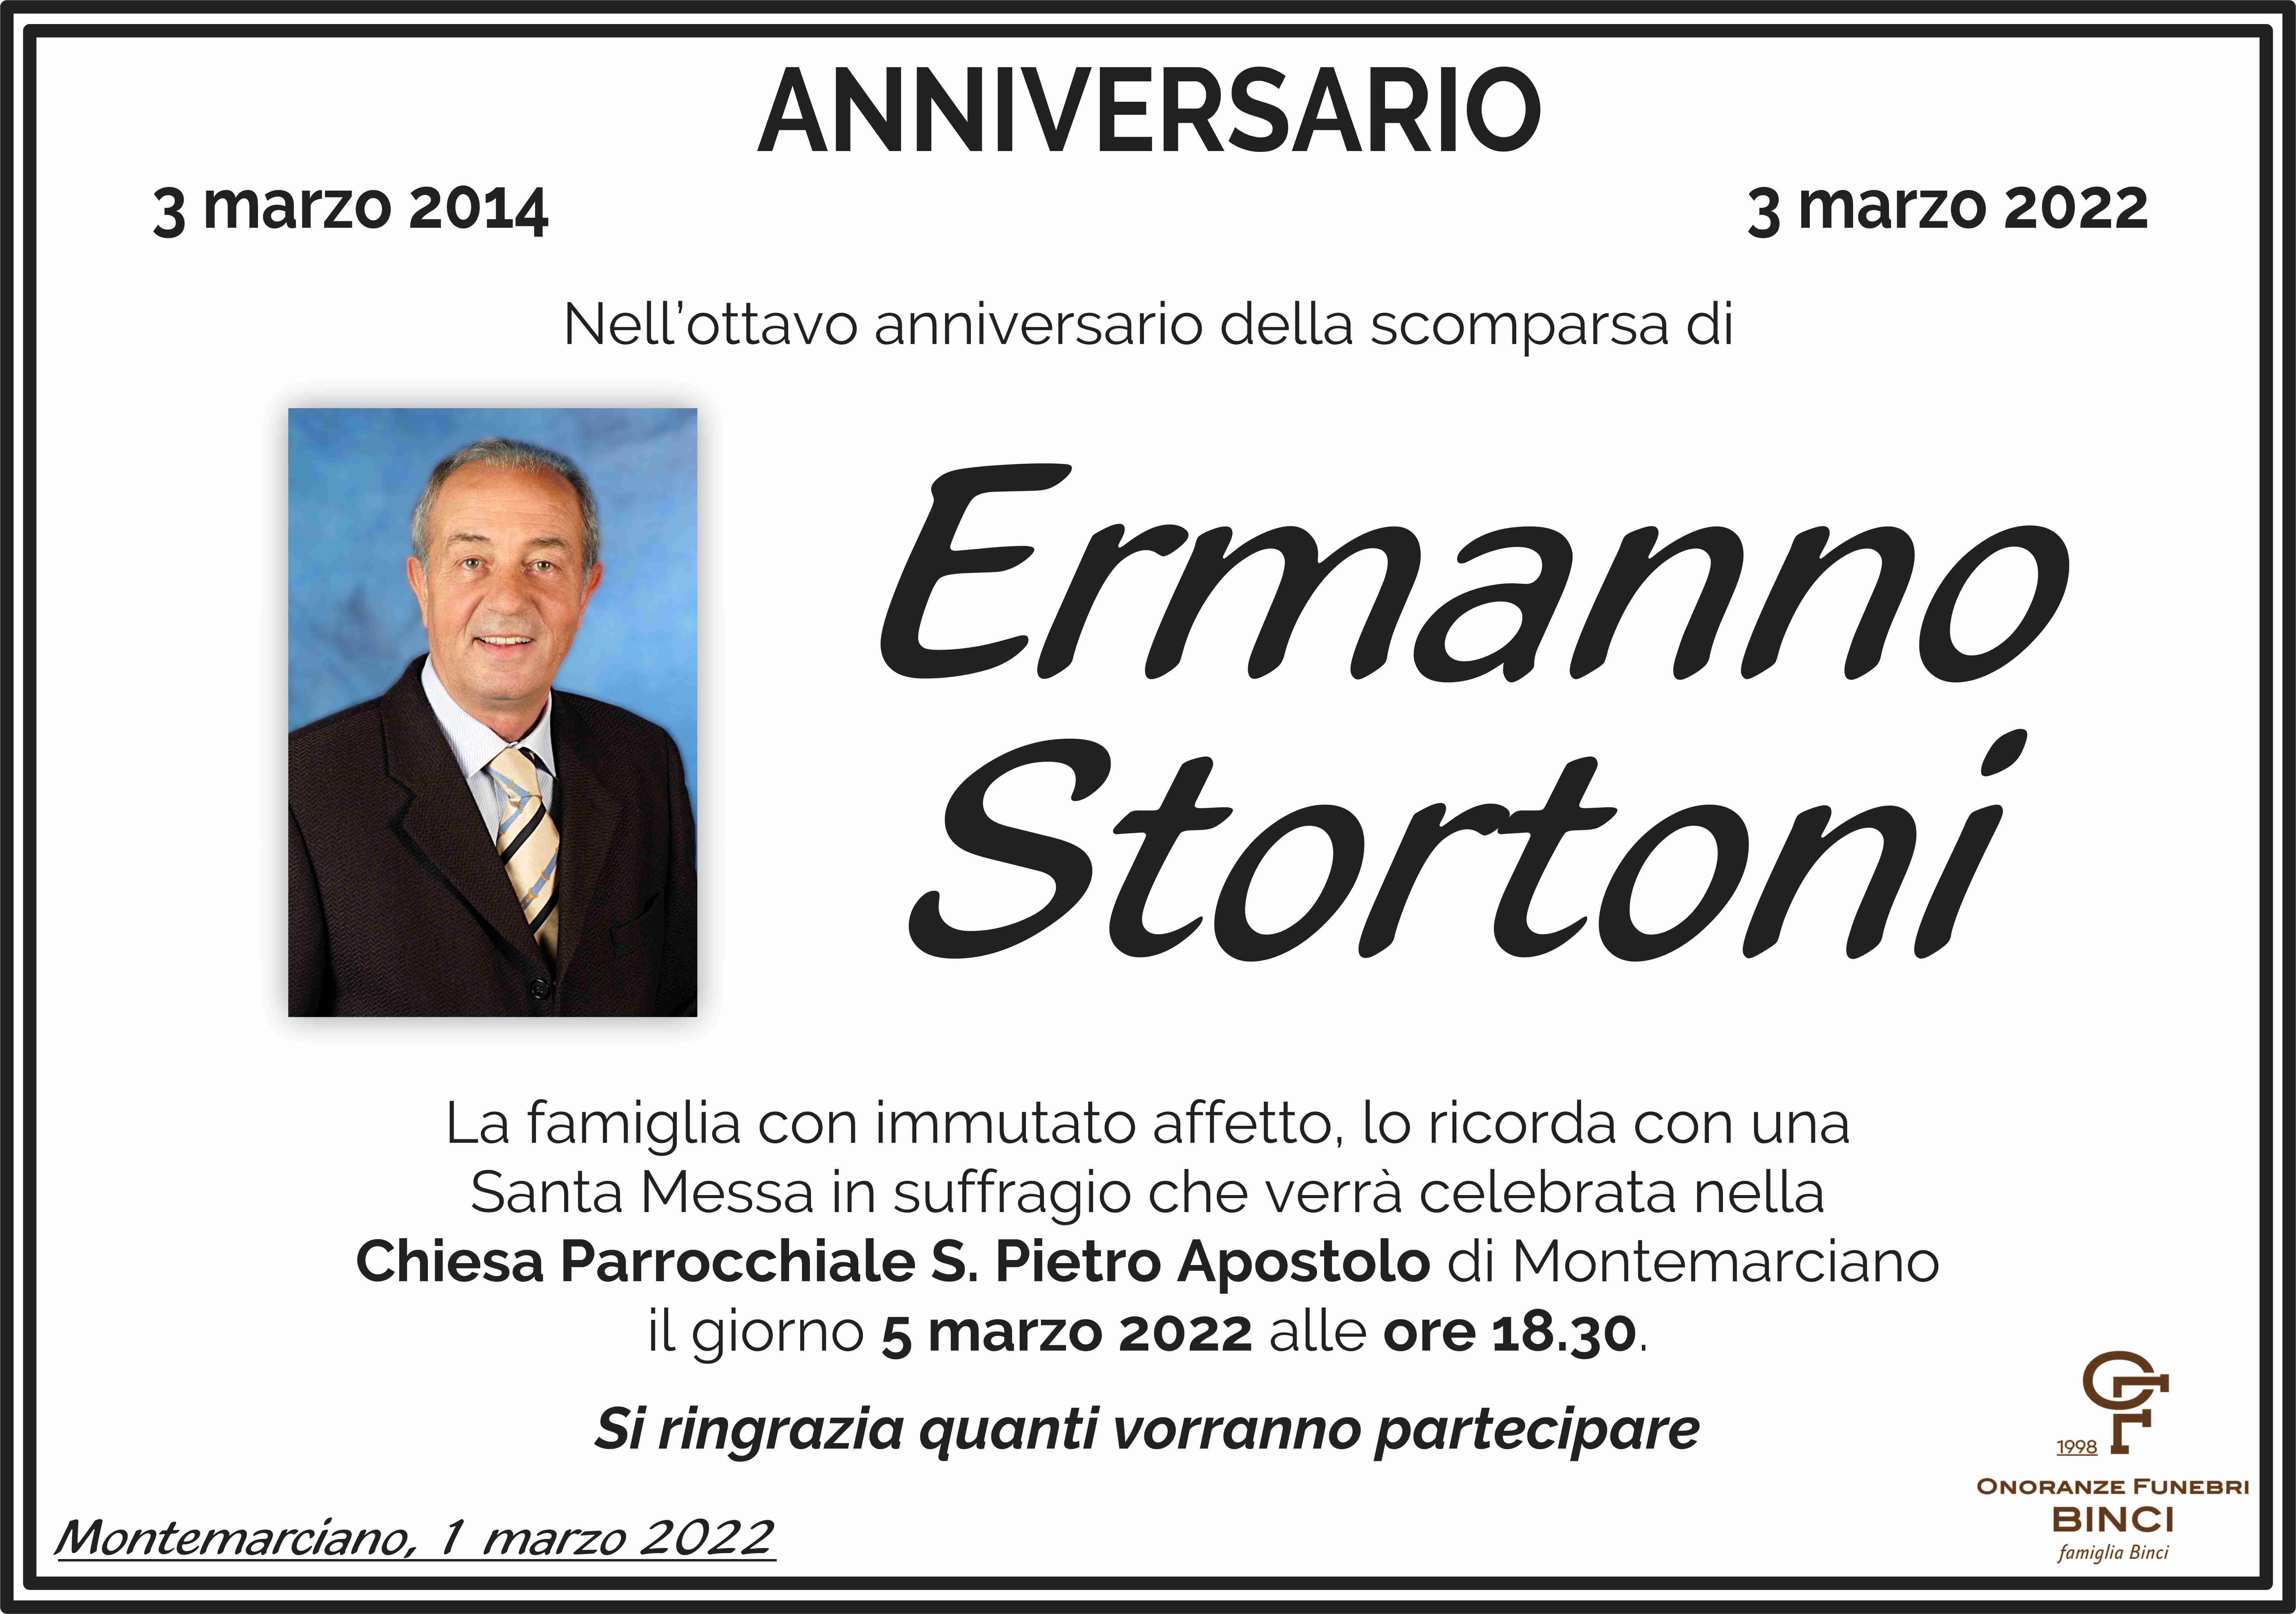 Ermanno Stortoni